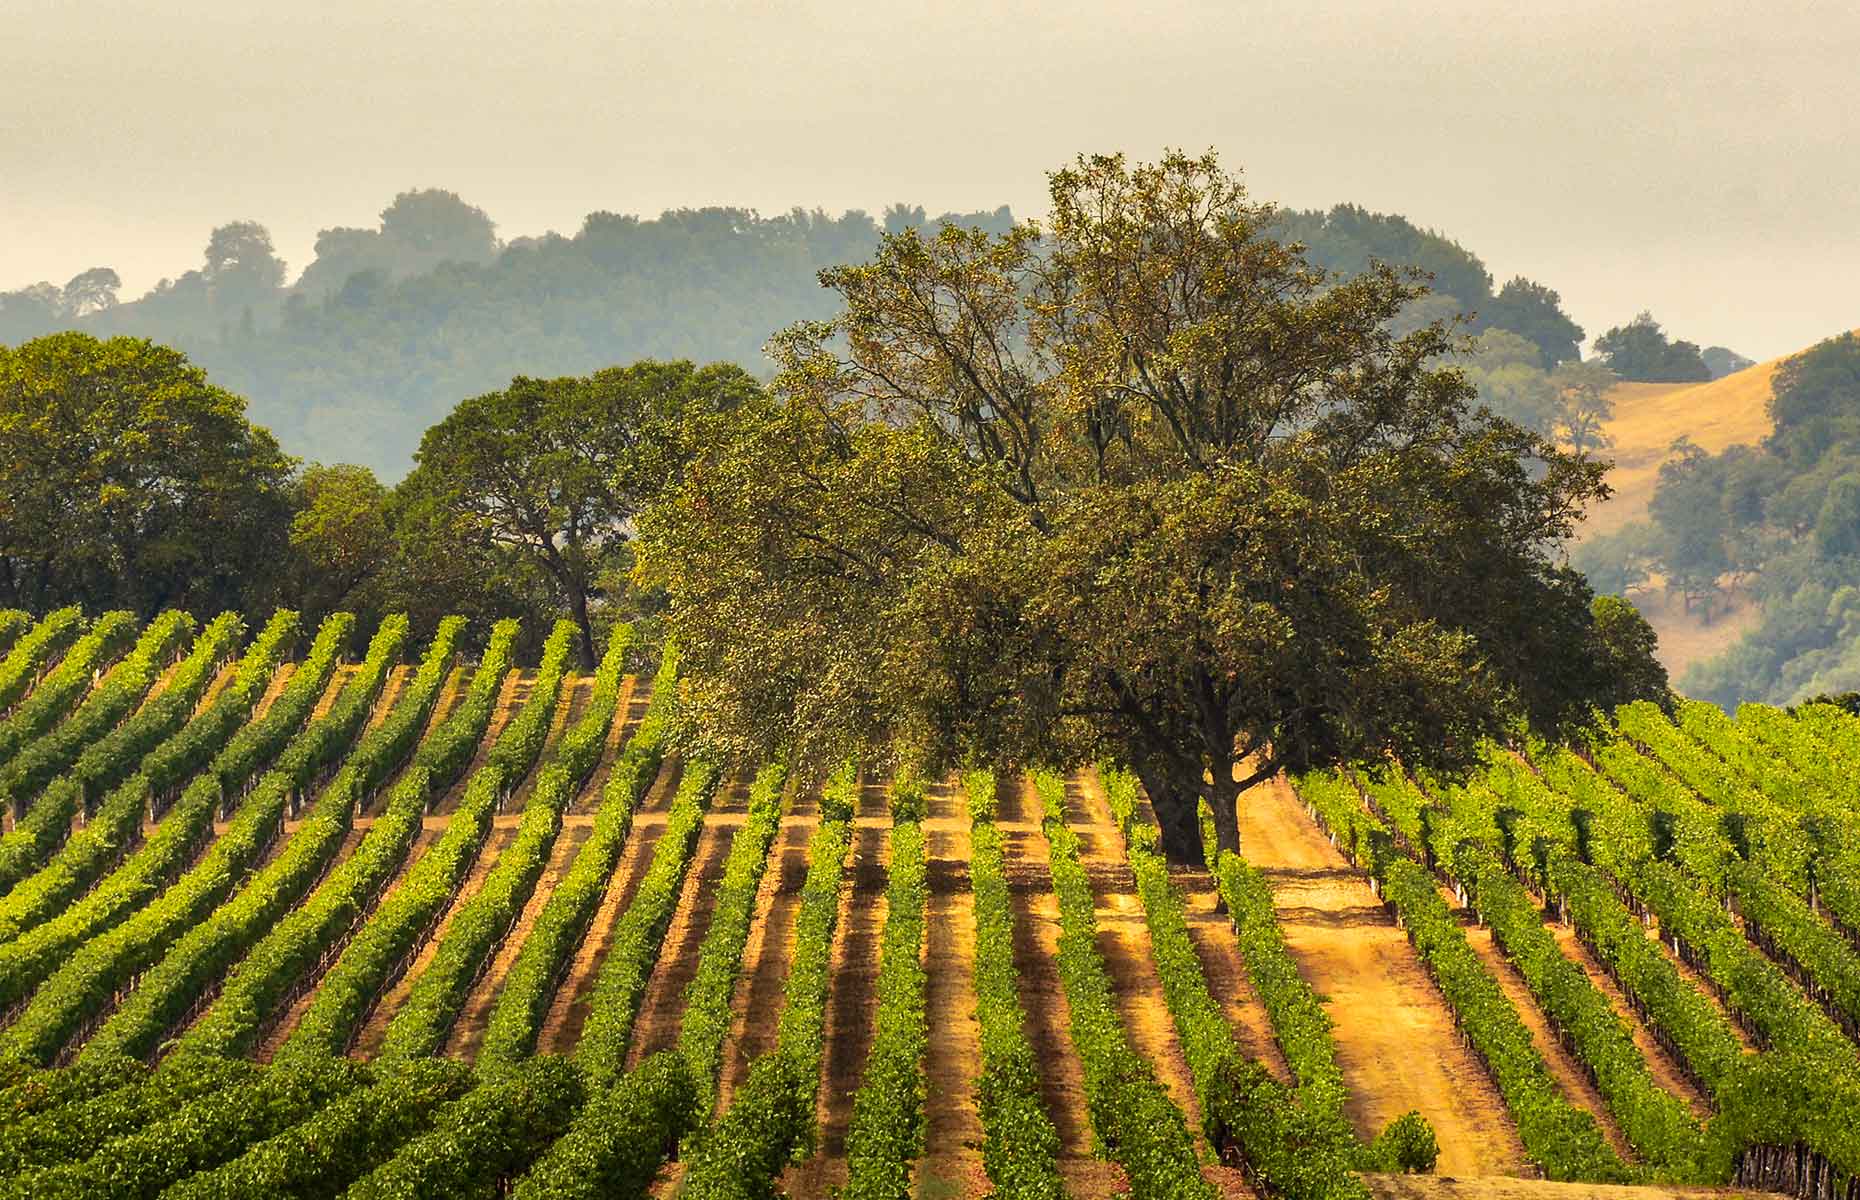 Vineyard in Sonoma County (Image: Gary Saxe/Shutterstock)